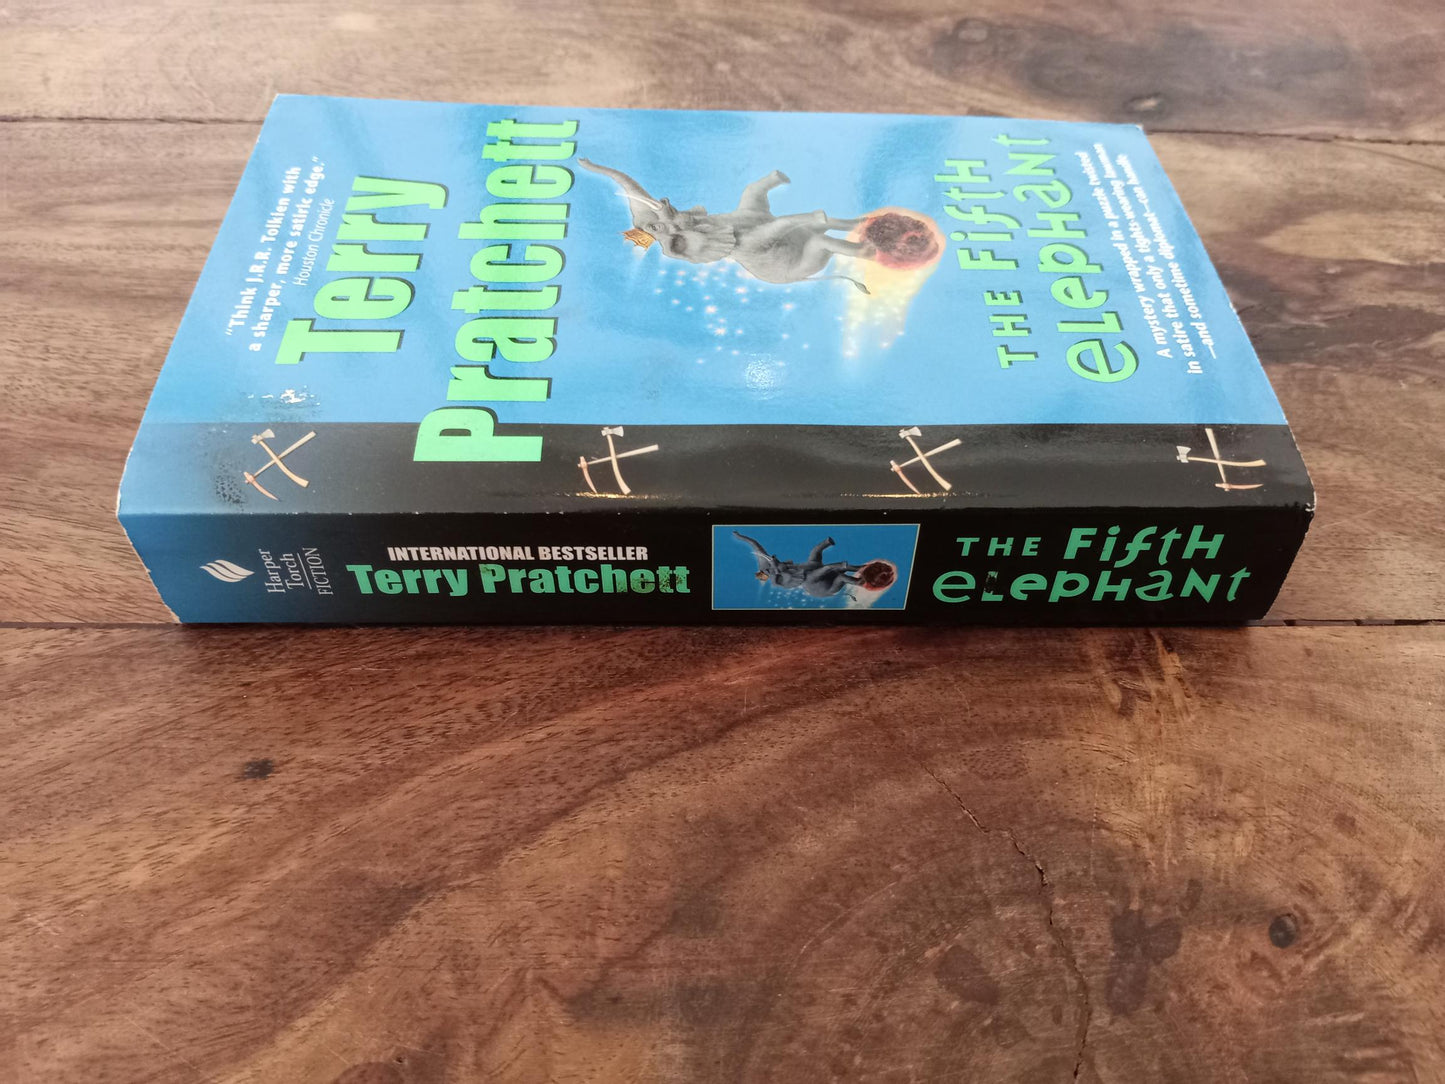 The Fifth Elephant A Discworld Novel #24 Terry Pratchett HarperCollins 2014